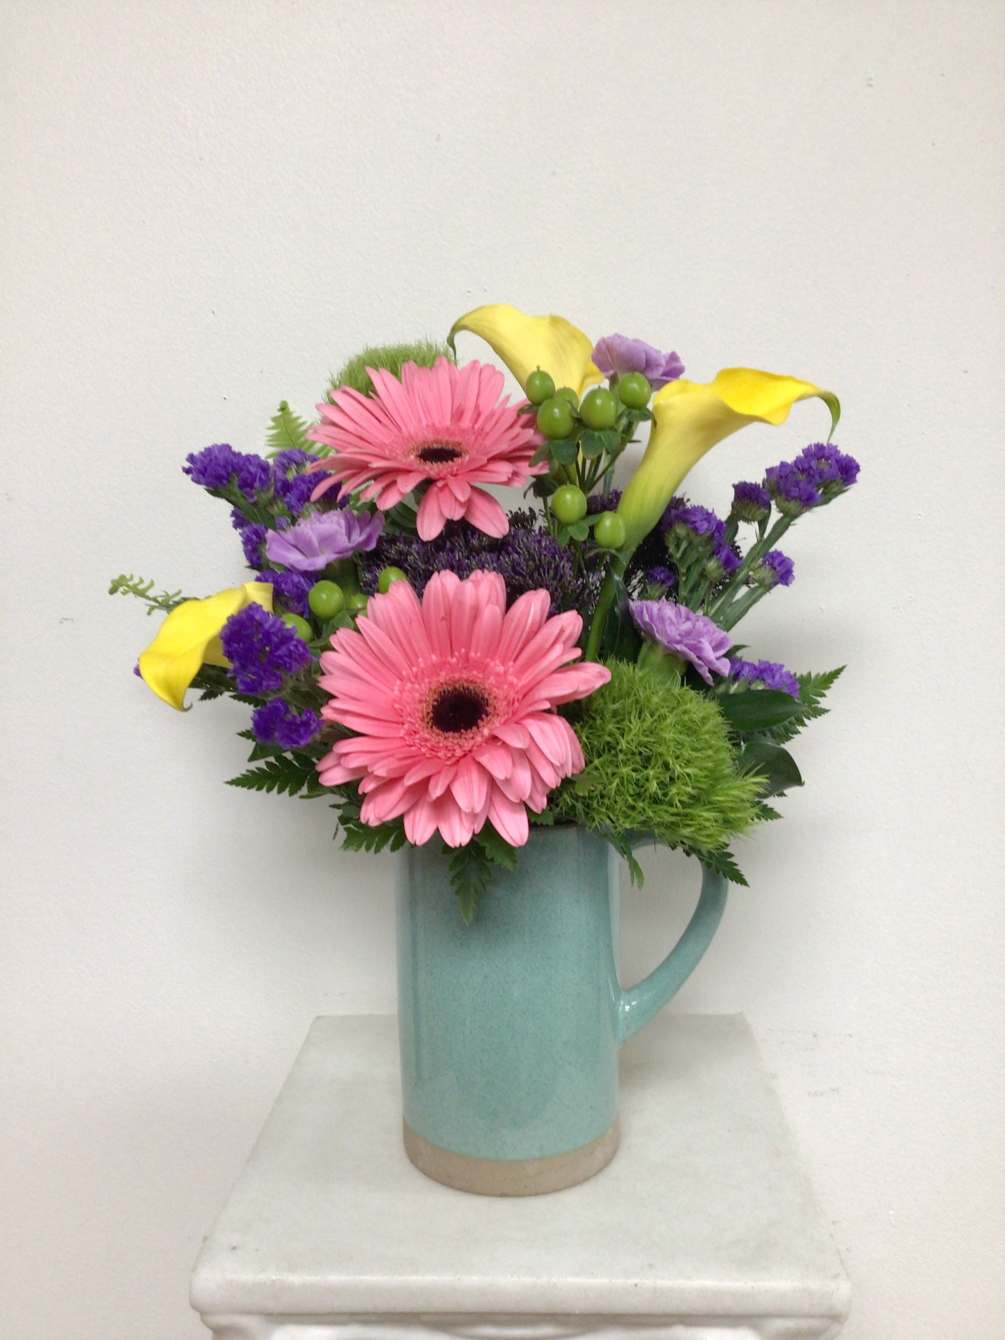 This aqua stoneware ceramic pitcher is arranged with pink gerbera daisies, purple